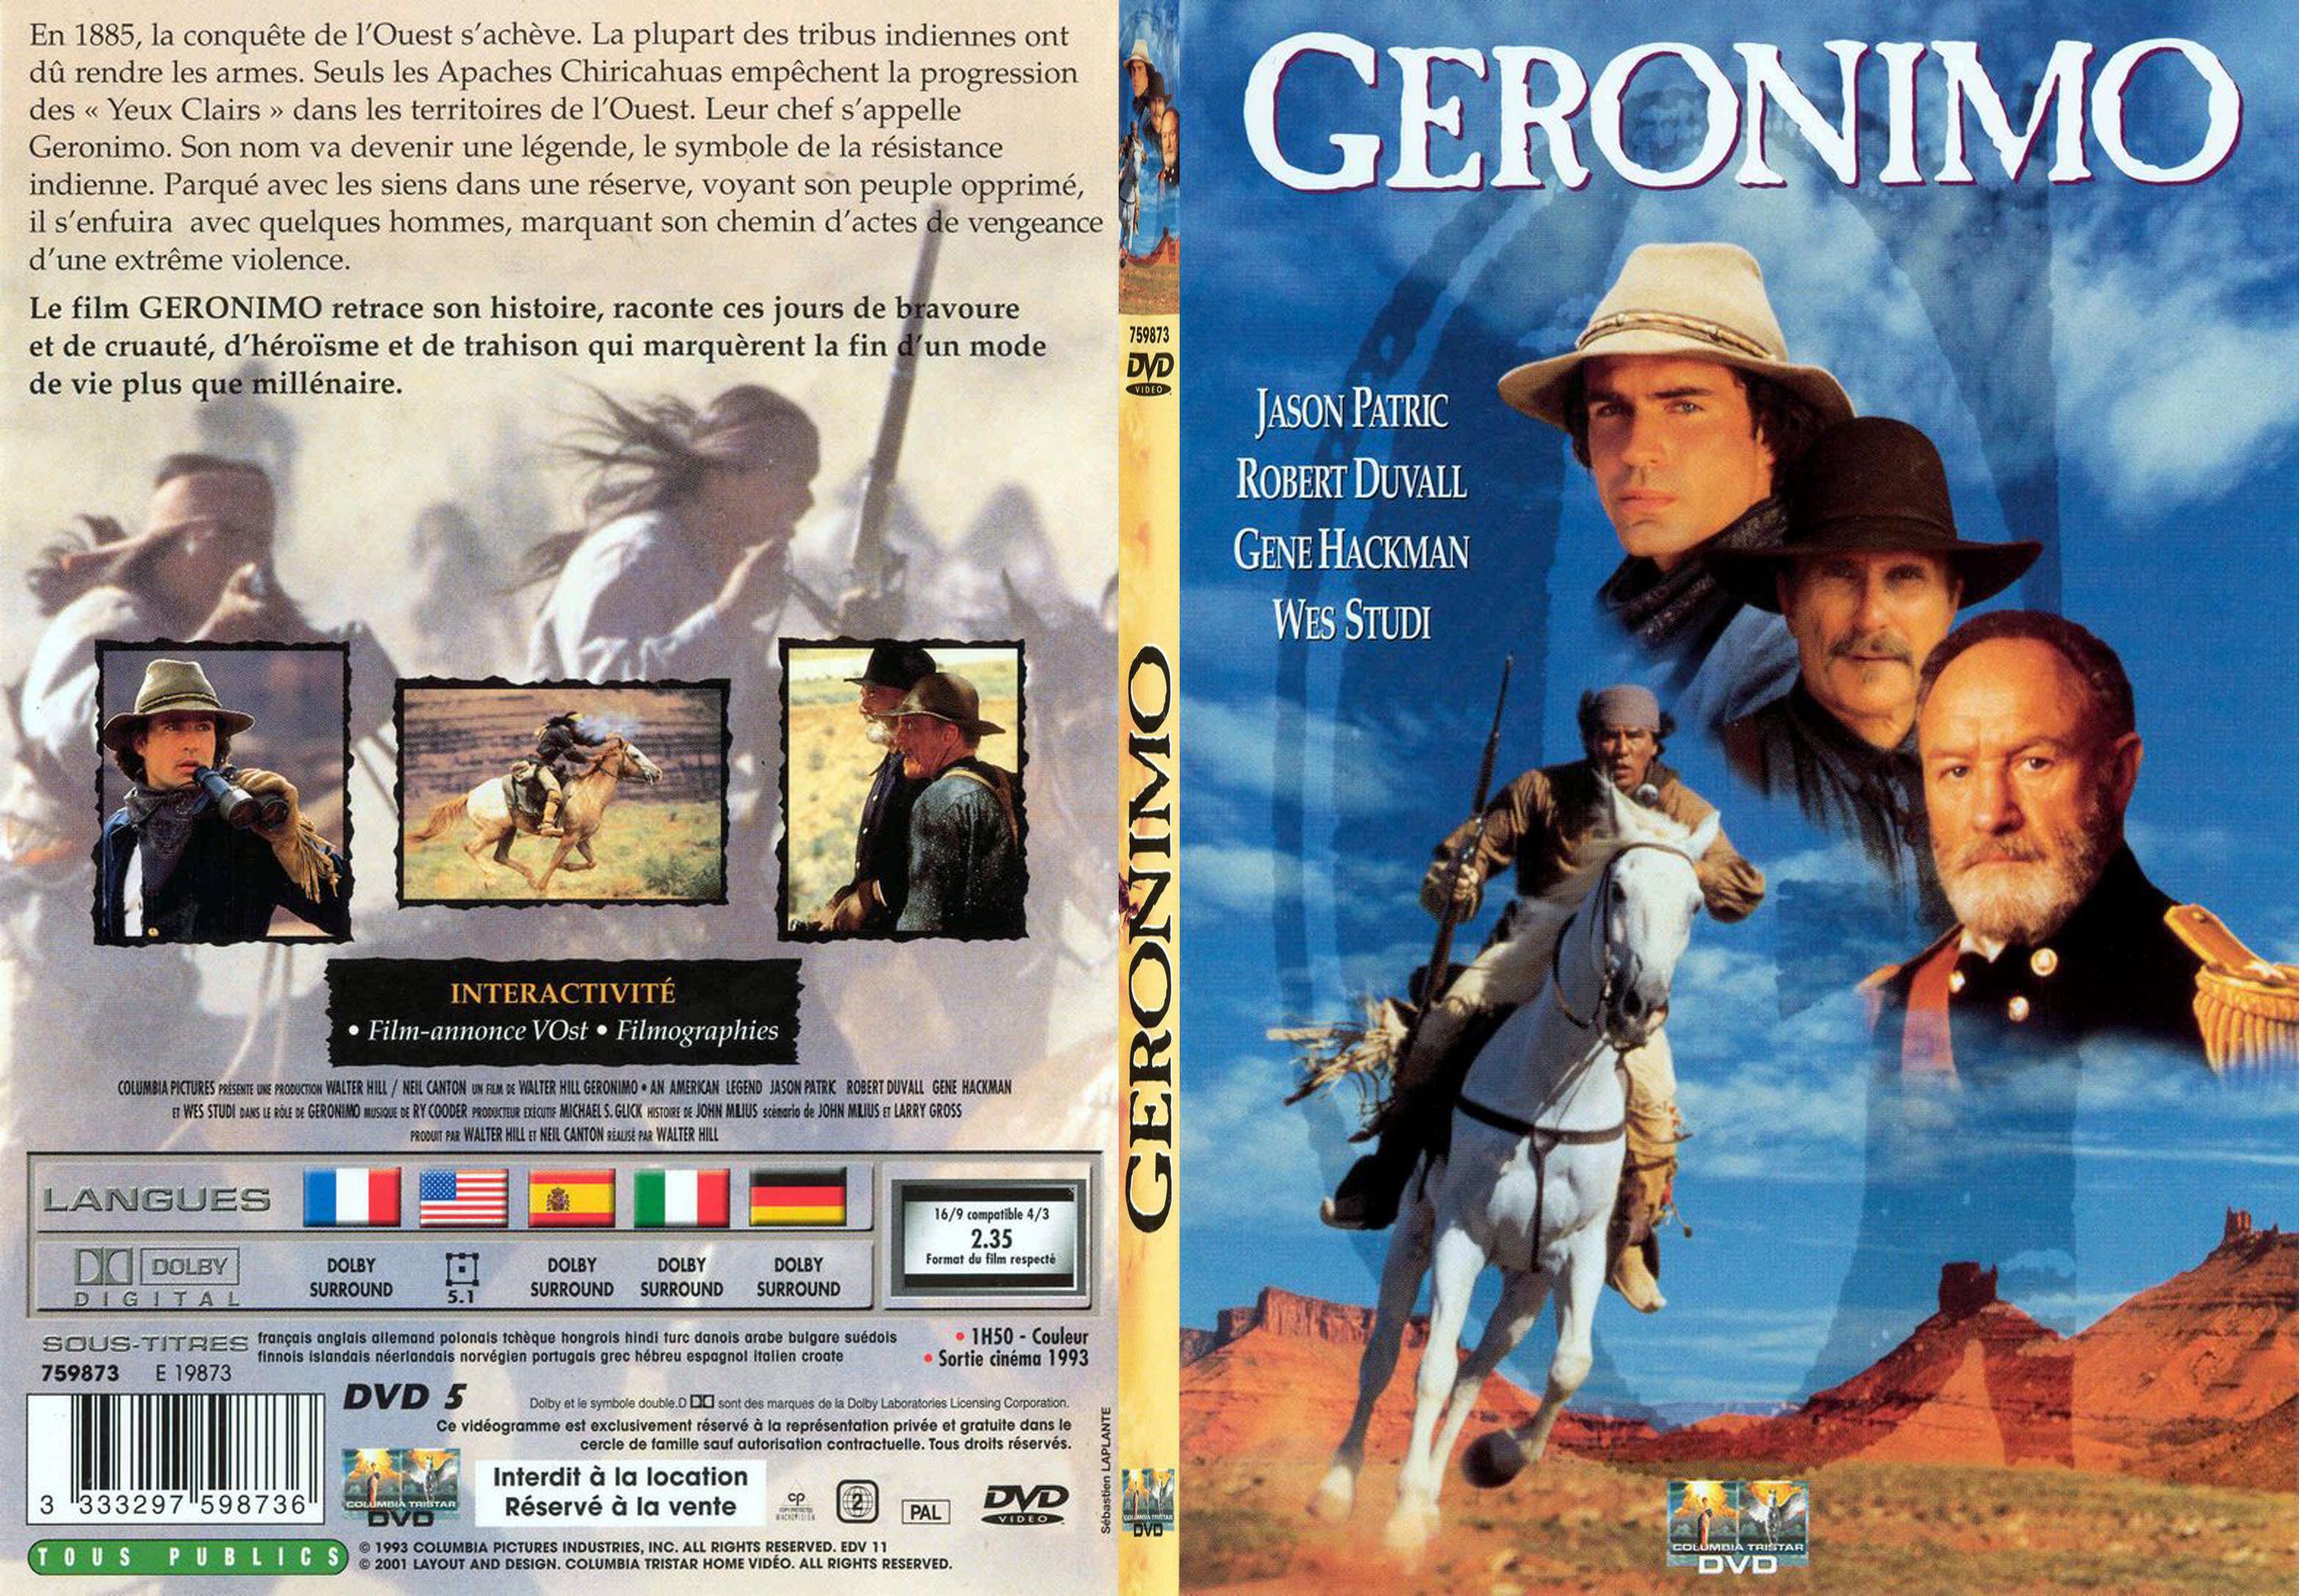 Jaquette DVD Geronimo - SLIM